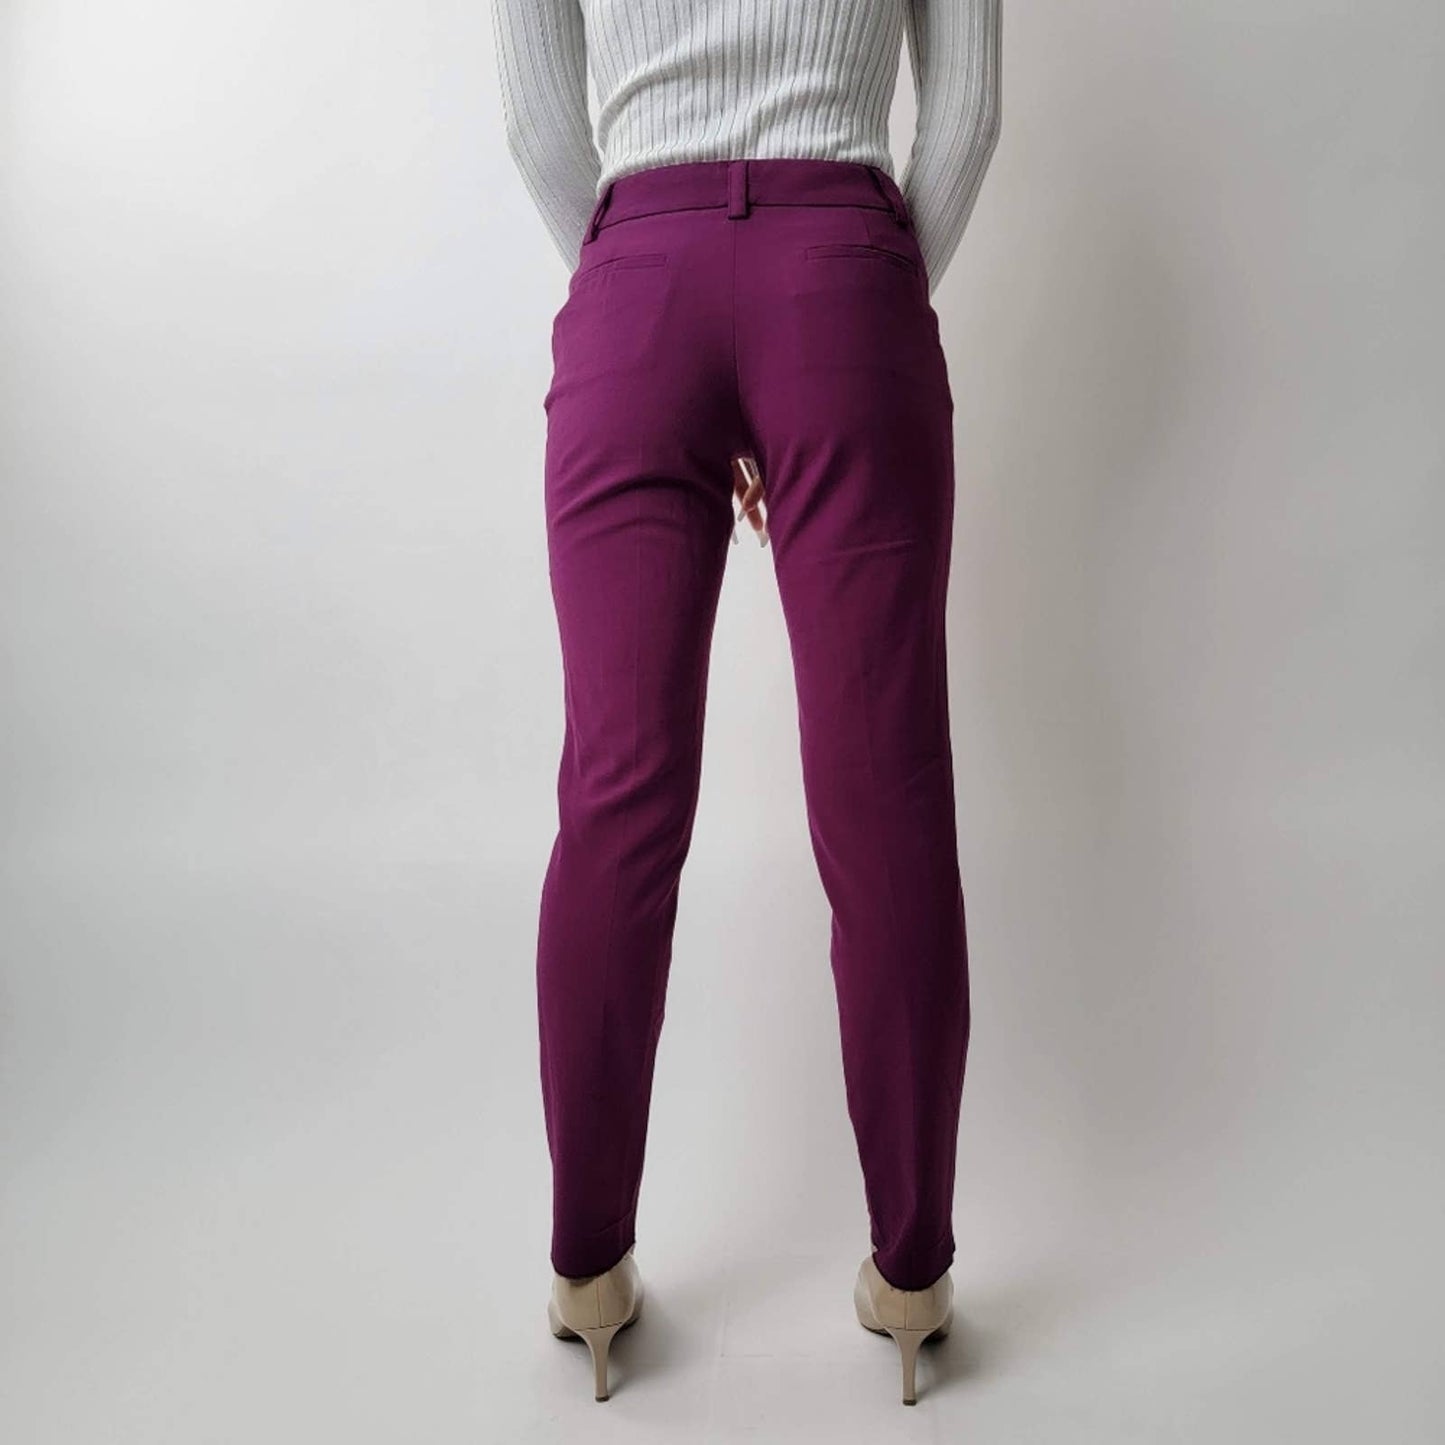 Alice + Olivia Burgundy Straight Slim Pants - 2